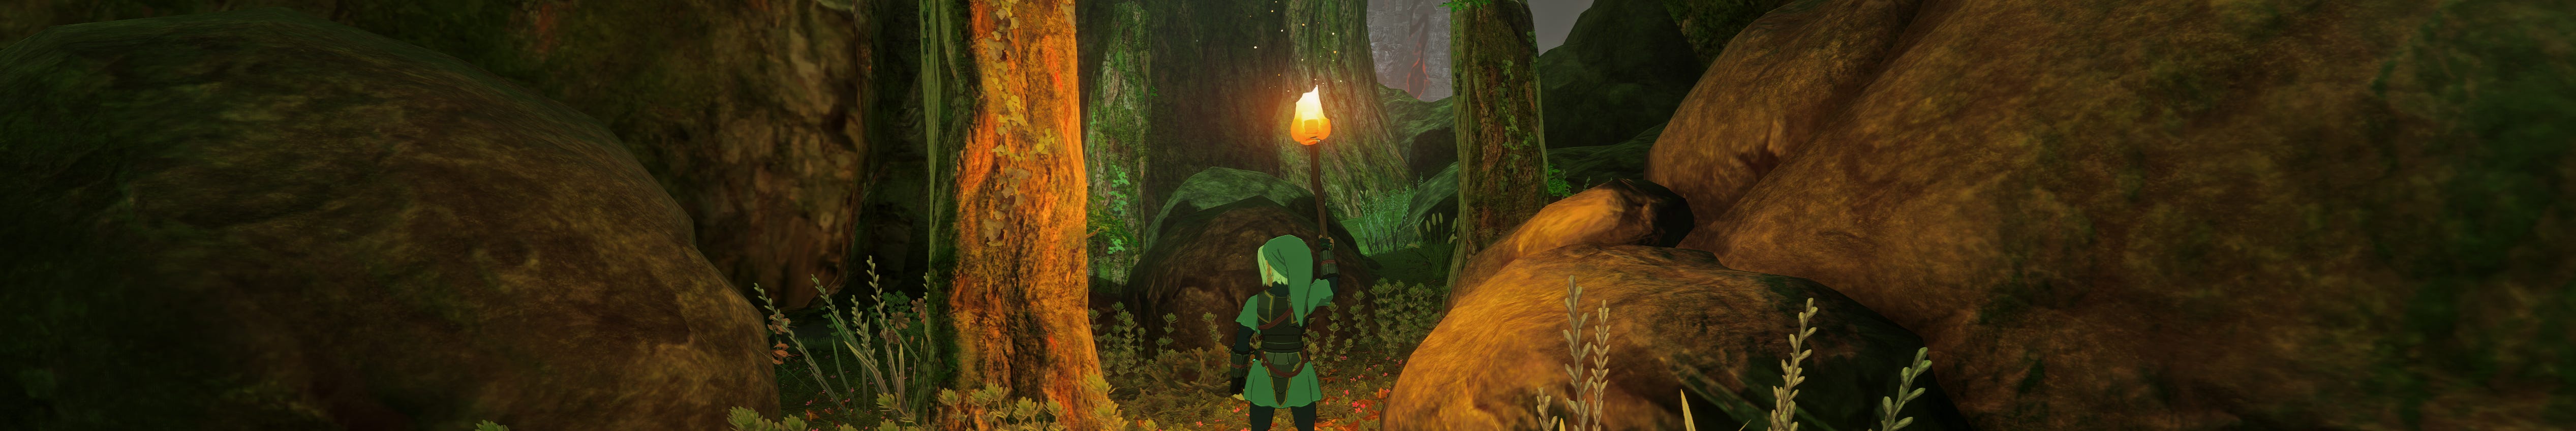 The Legend of Zelda: Breath of the Wild (4K / 2160p), yuzu Emulator on PC